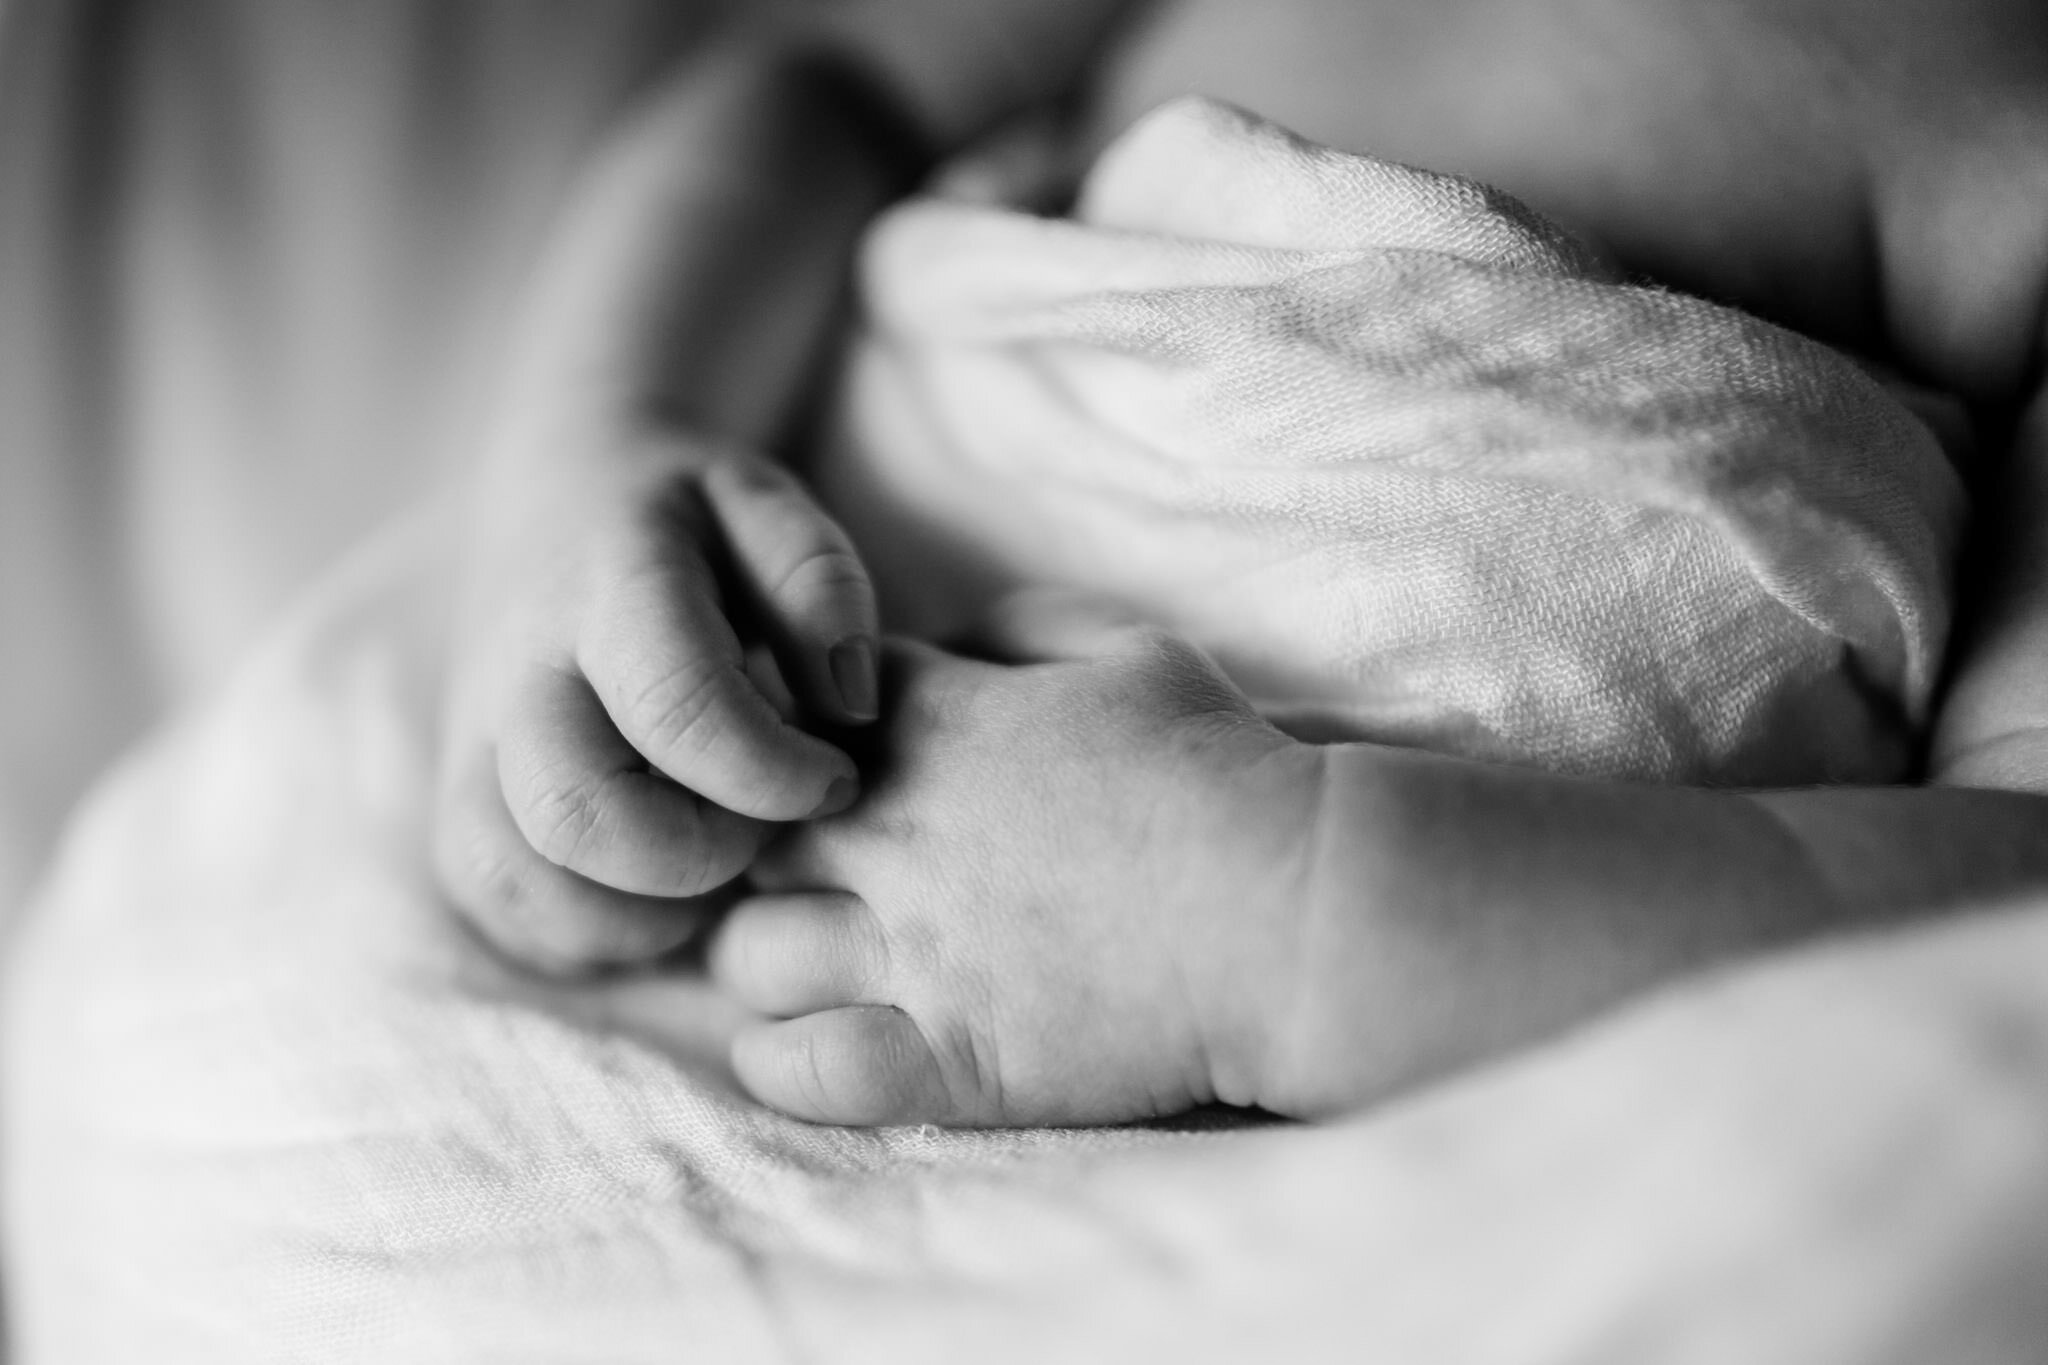 Durham Newborn Photographer | By G. Lin Photography | Baby's hands